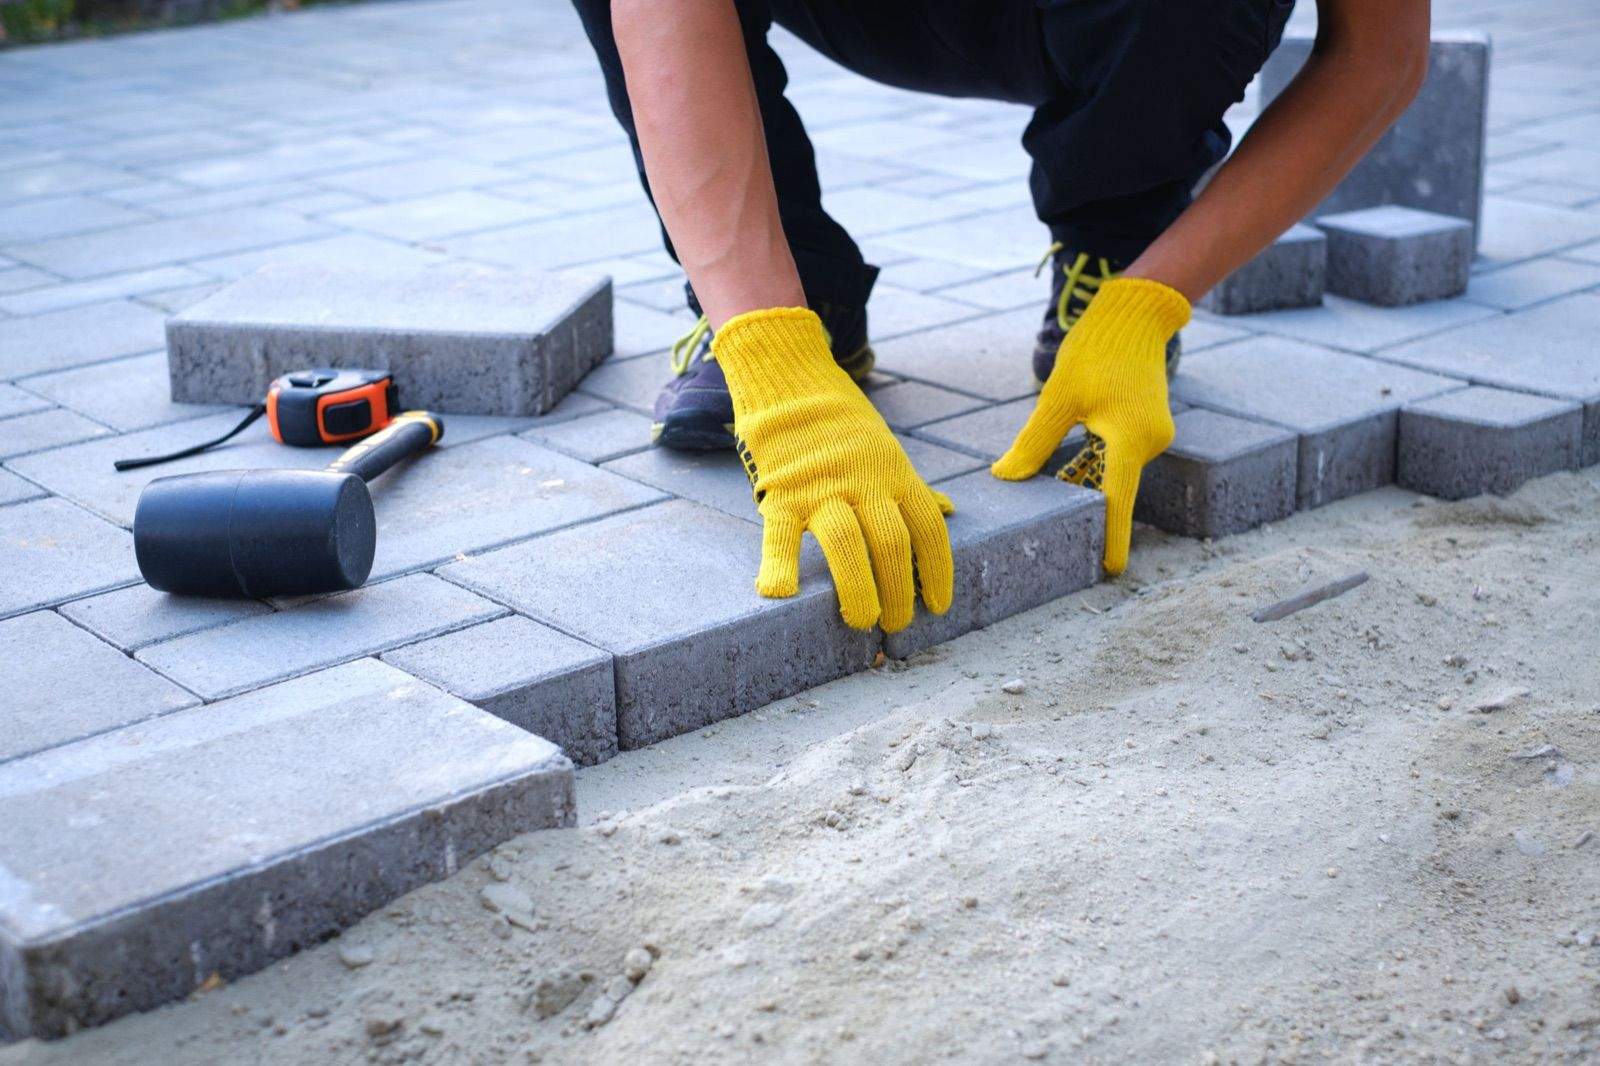 Измити плочки, гранитни или бетонни павета - какво да изберете?